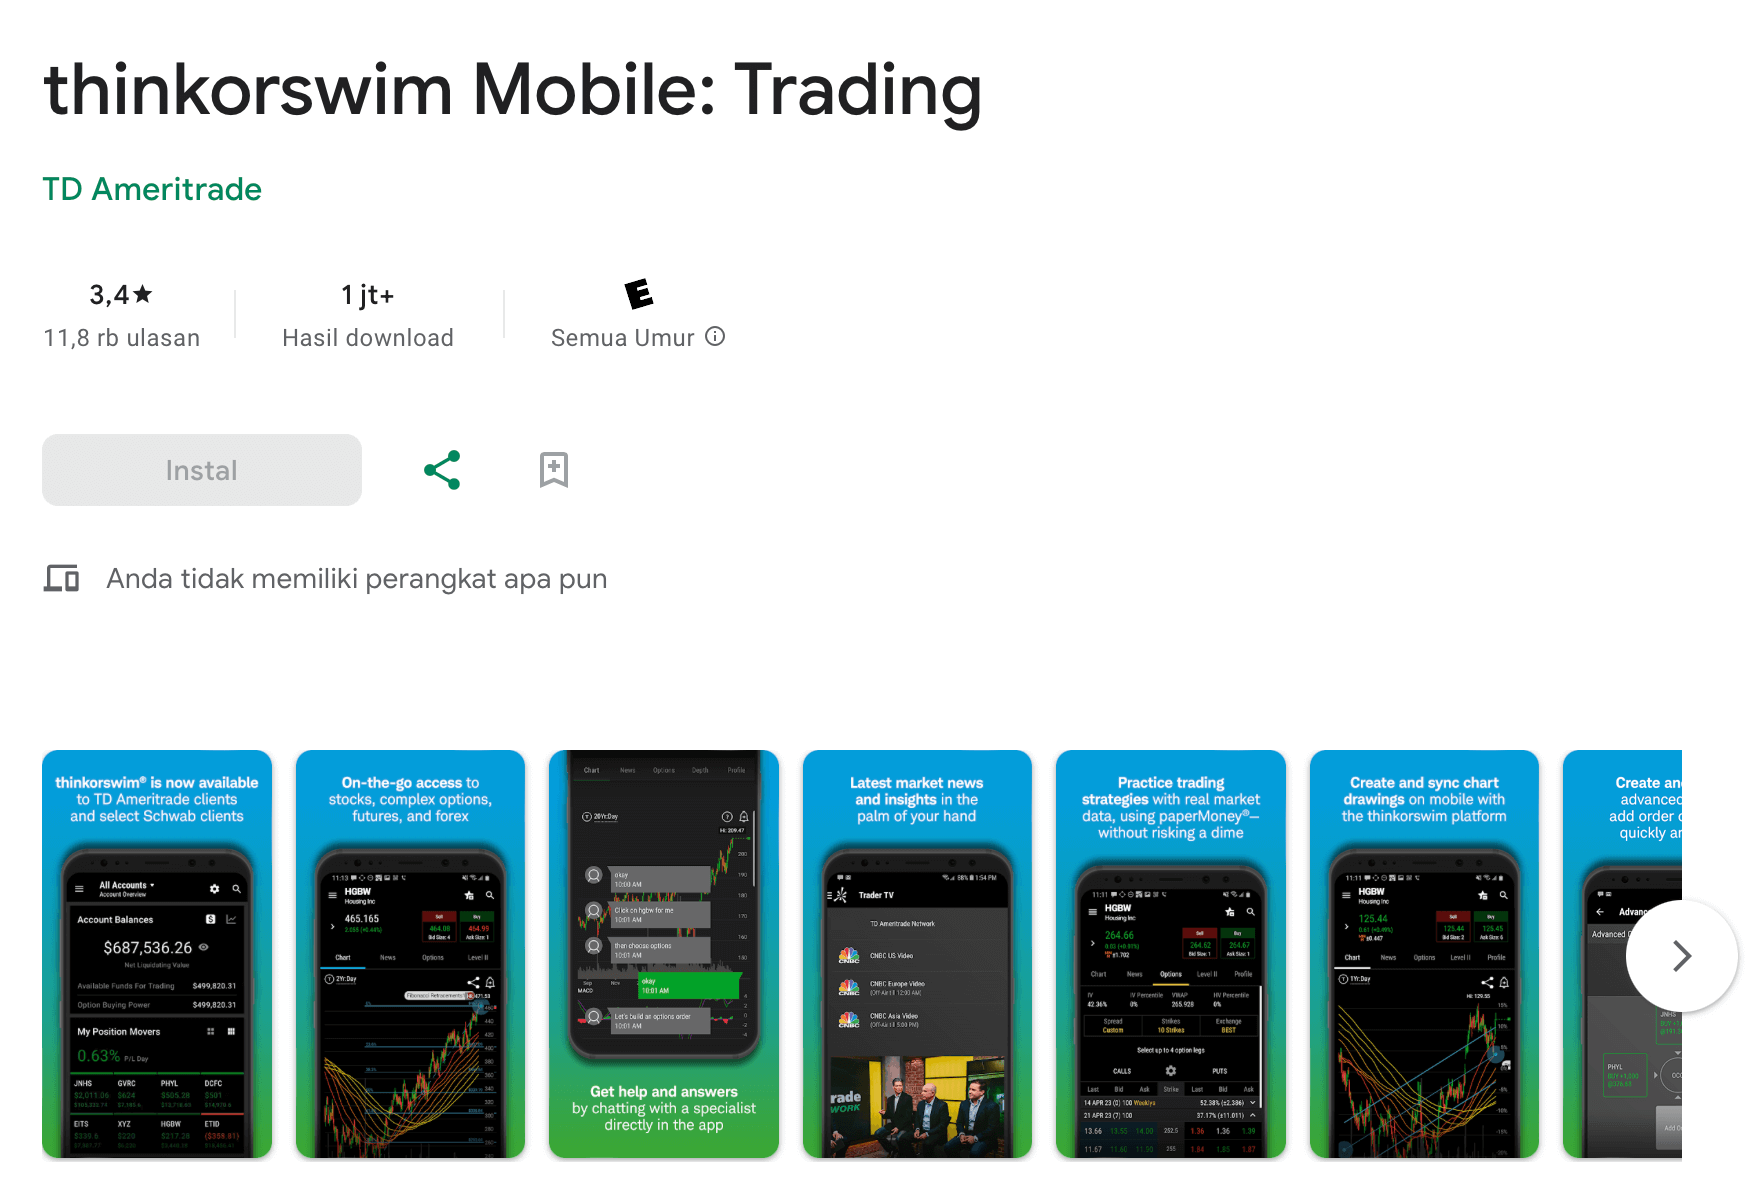 Thinkorswim Mobile